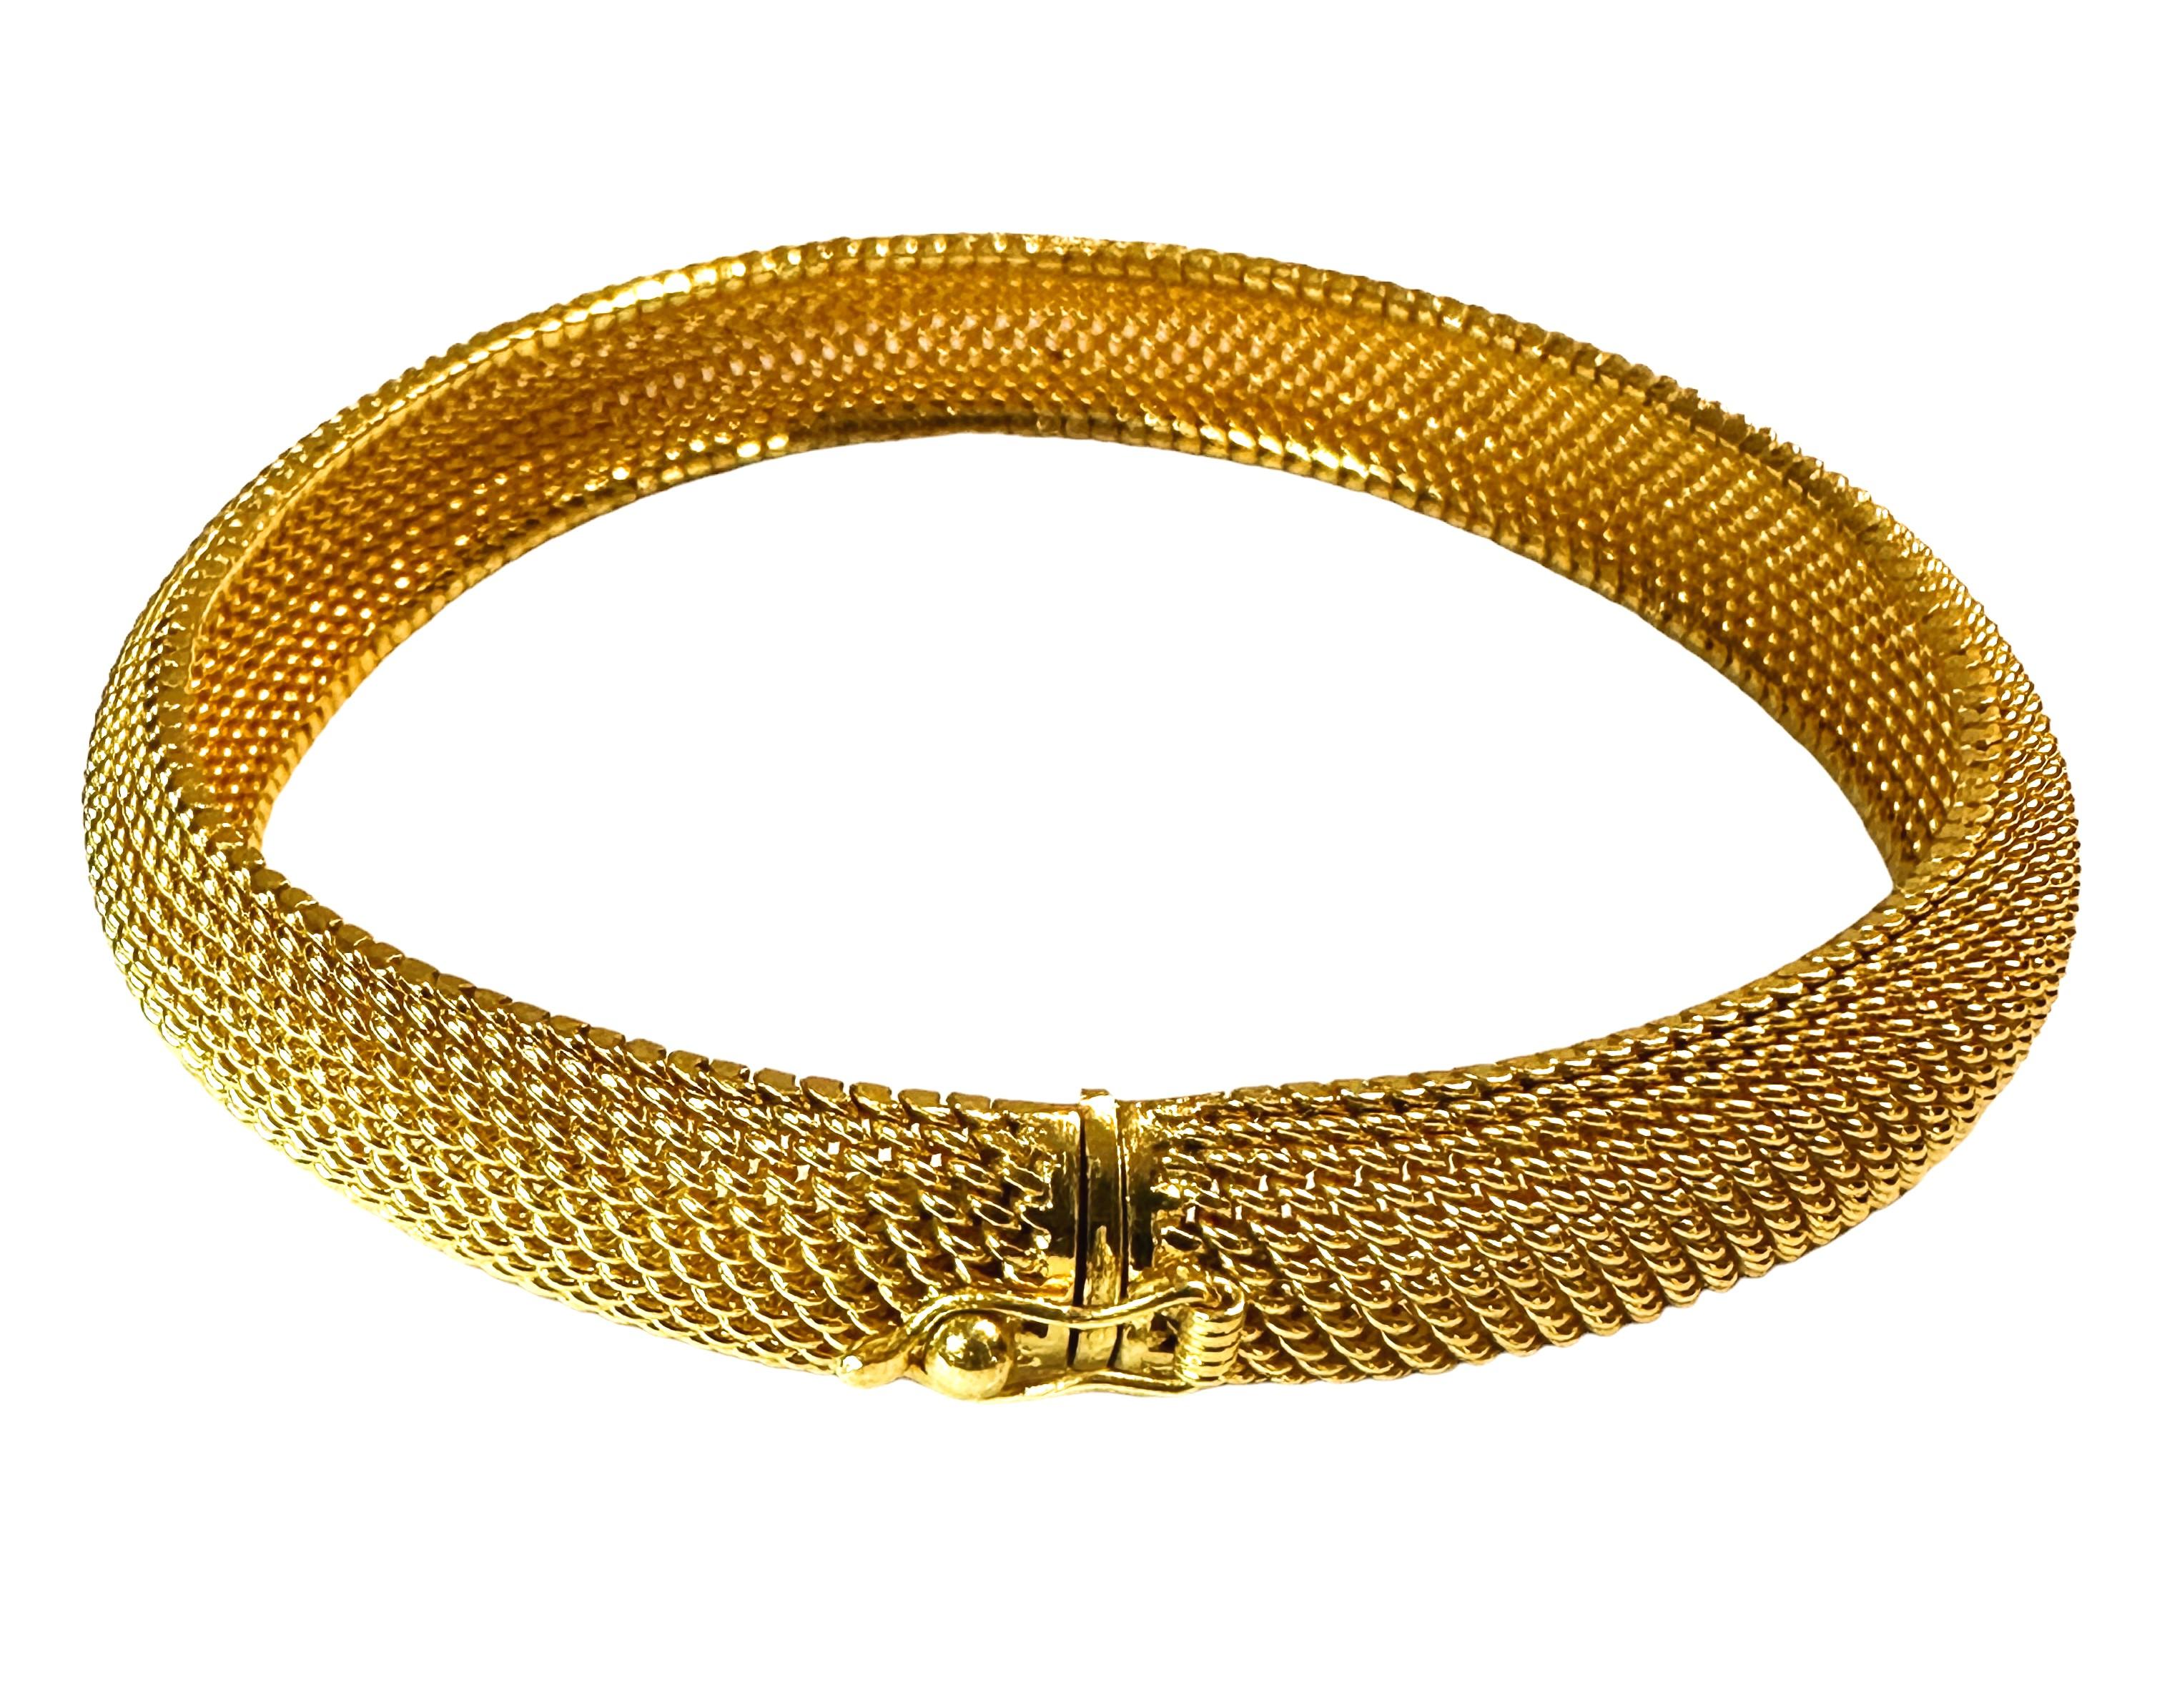 Stunning 22K Yellow Gold Woven Caviar Bracelet 30.59 Grams For Sale 3